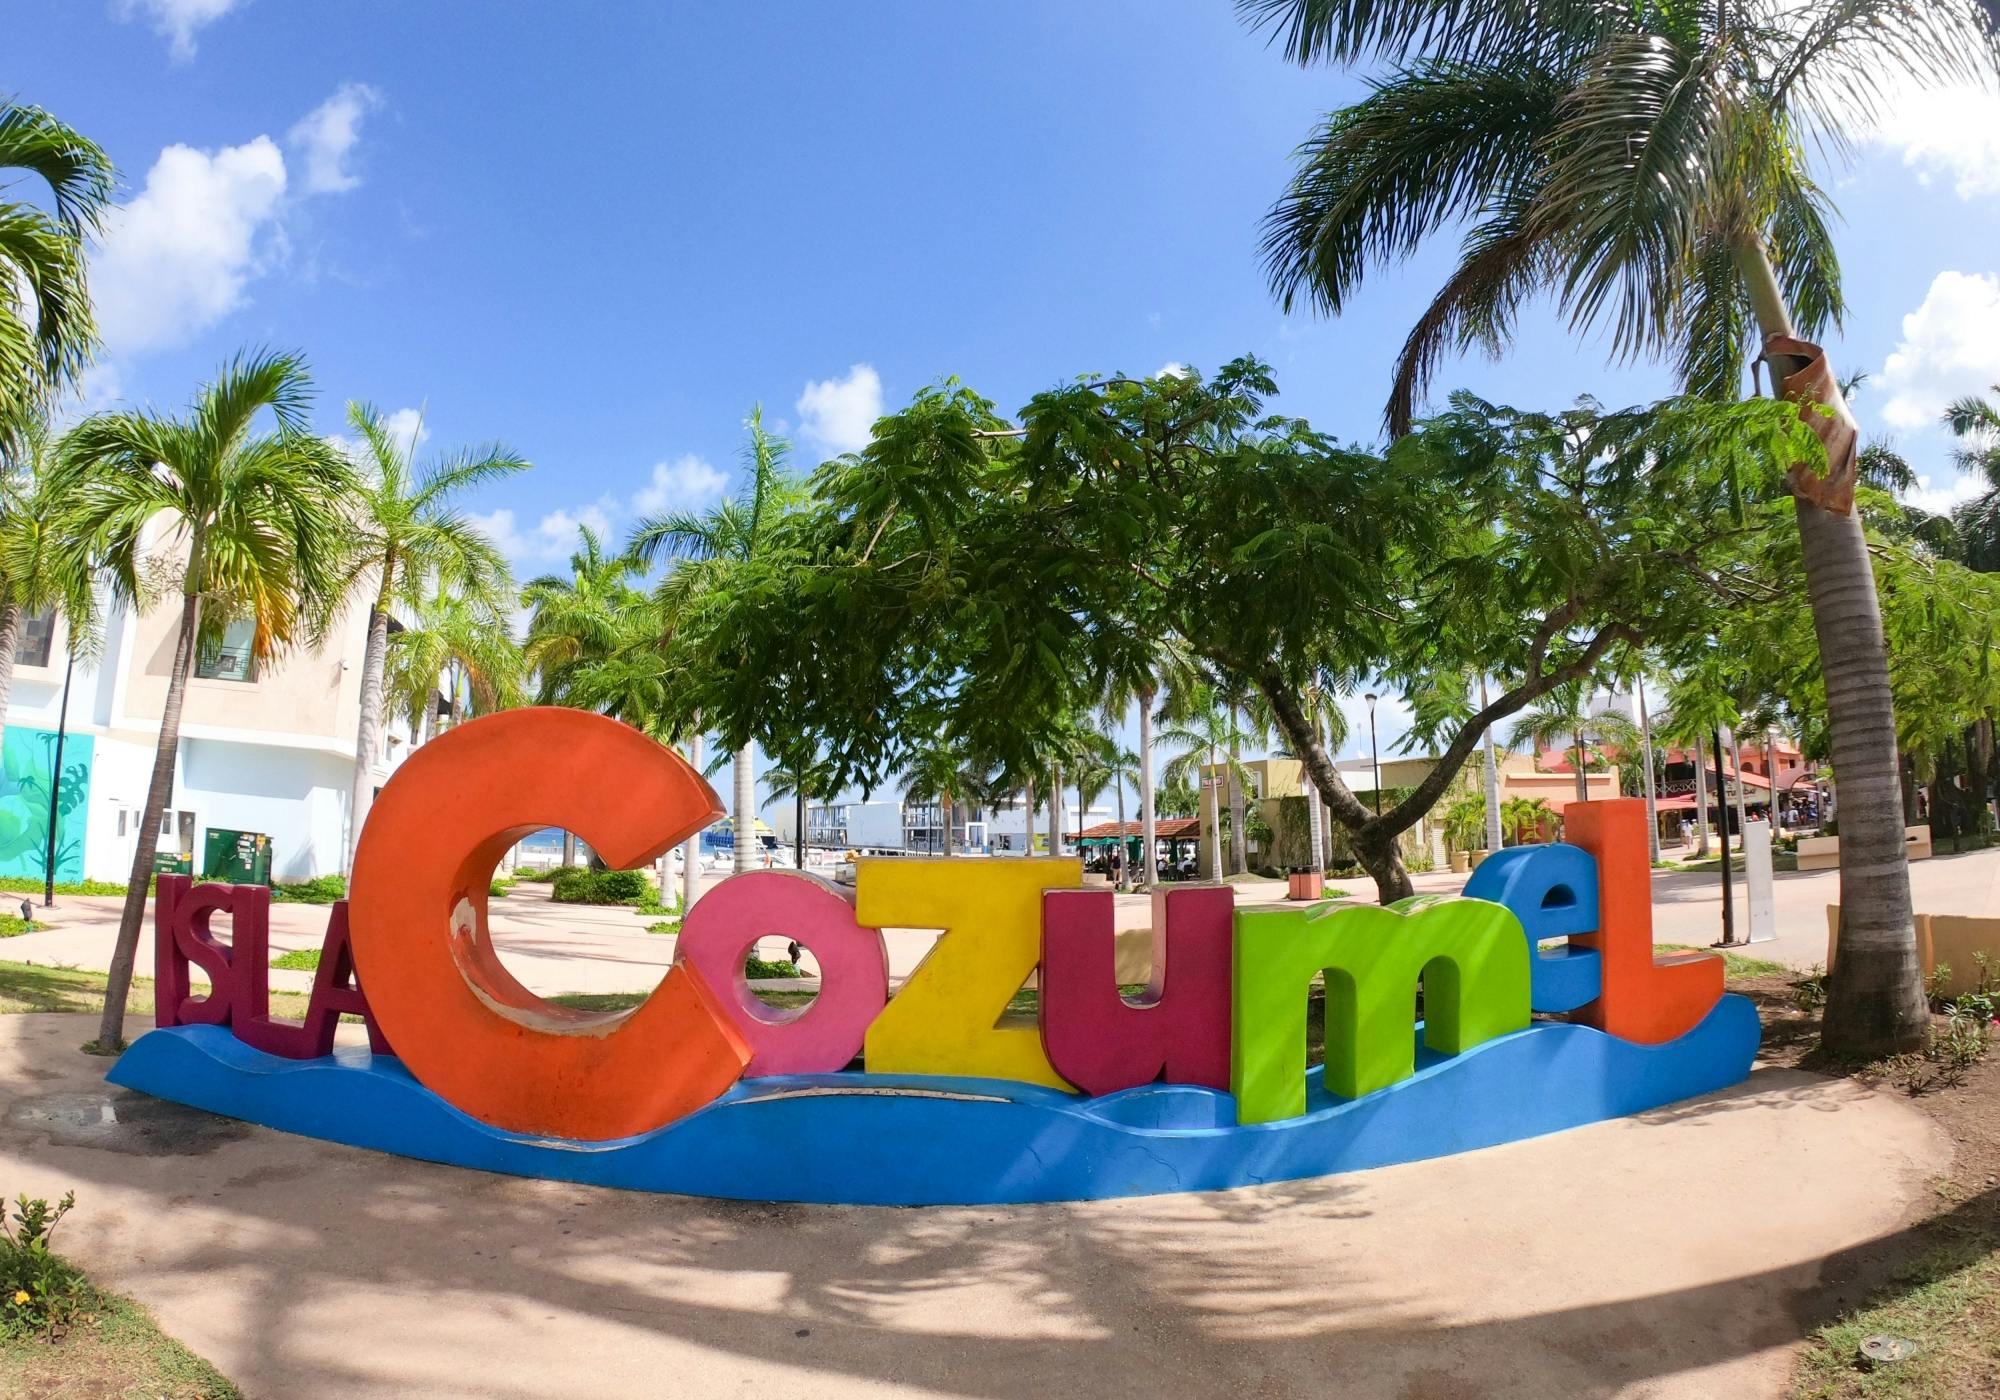 Cozumel island adventure from Cancun and Riviera Maya